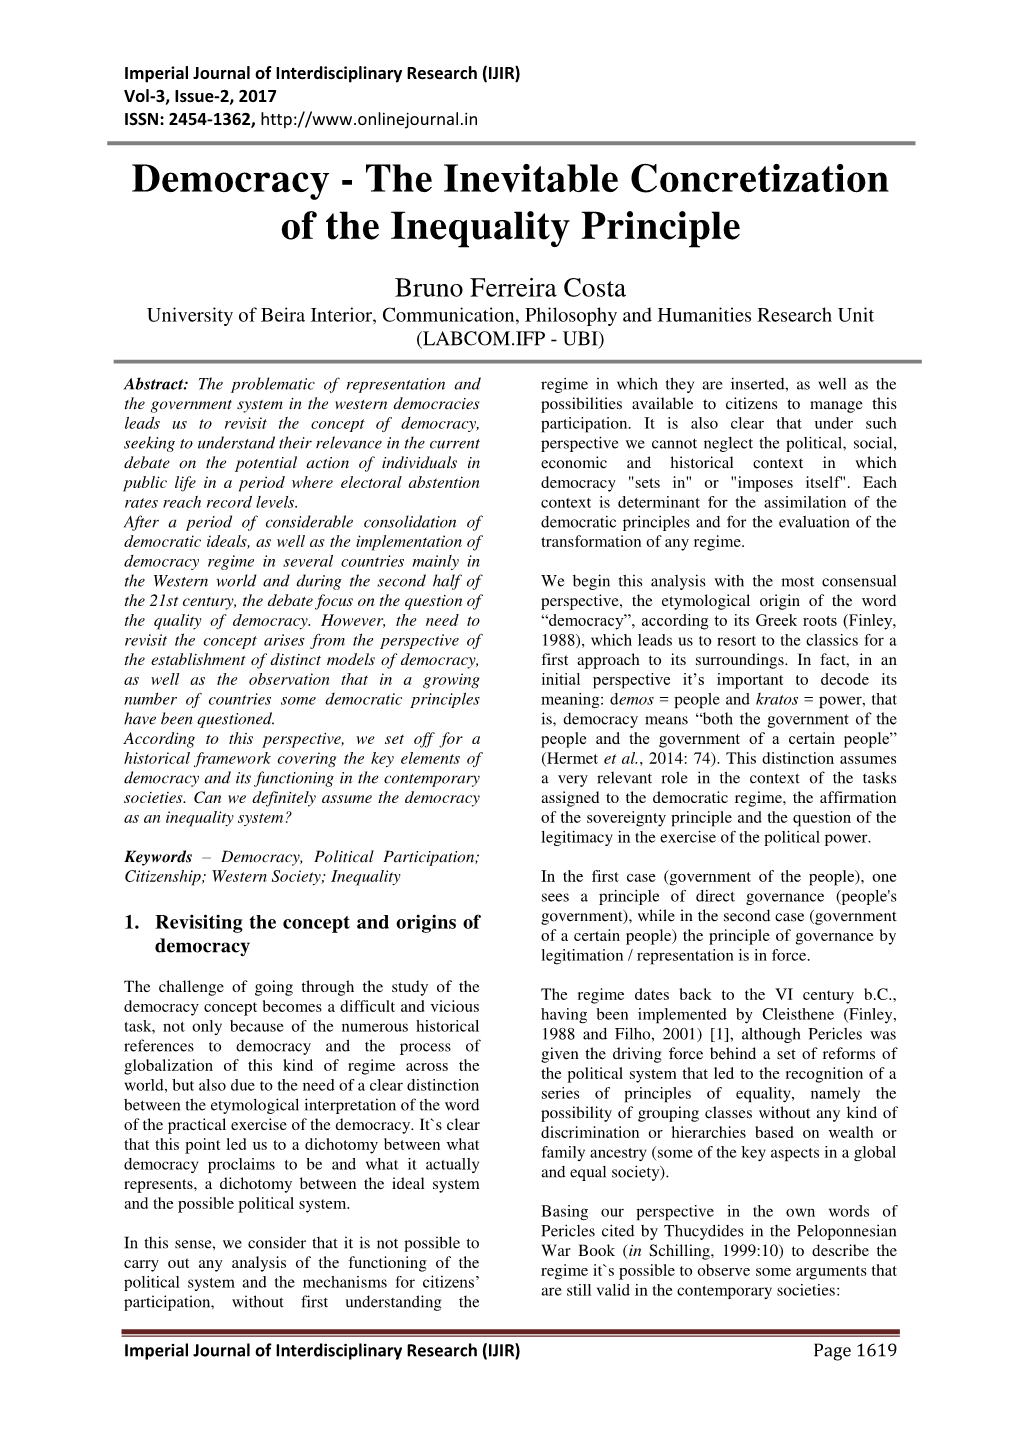 Democracy - the Inevitable Concretization of the Inequality Principle